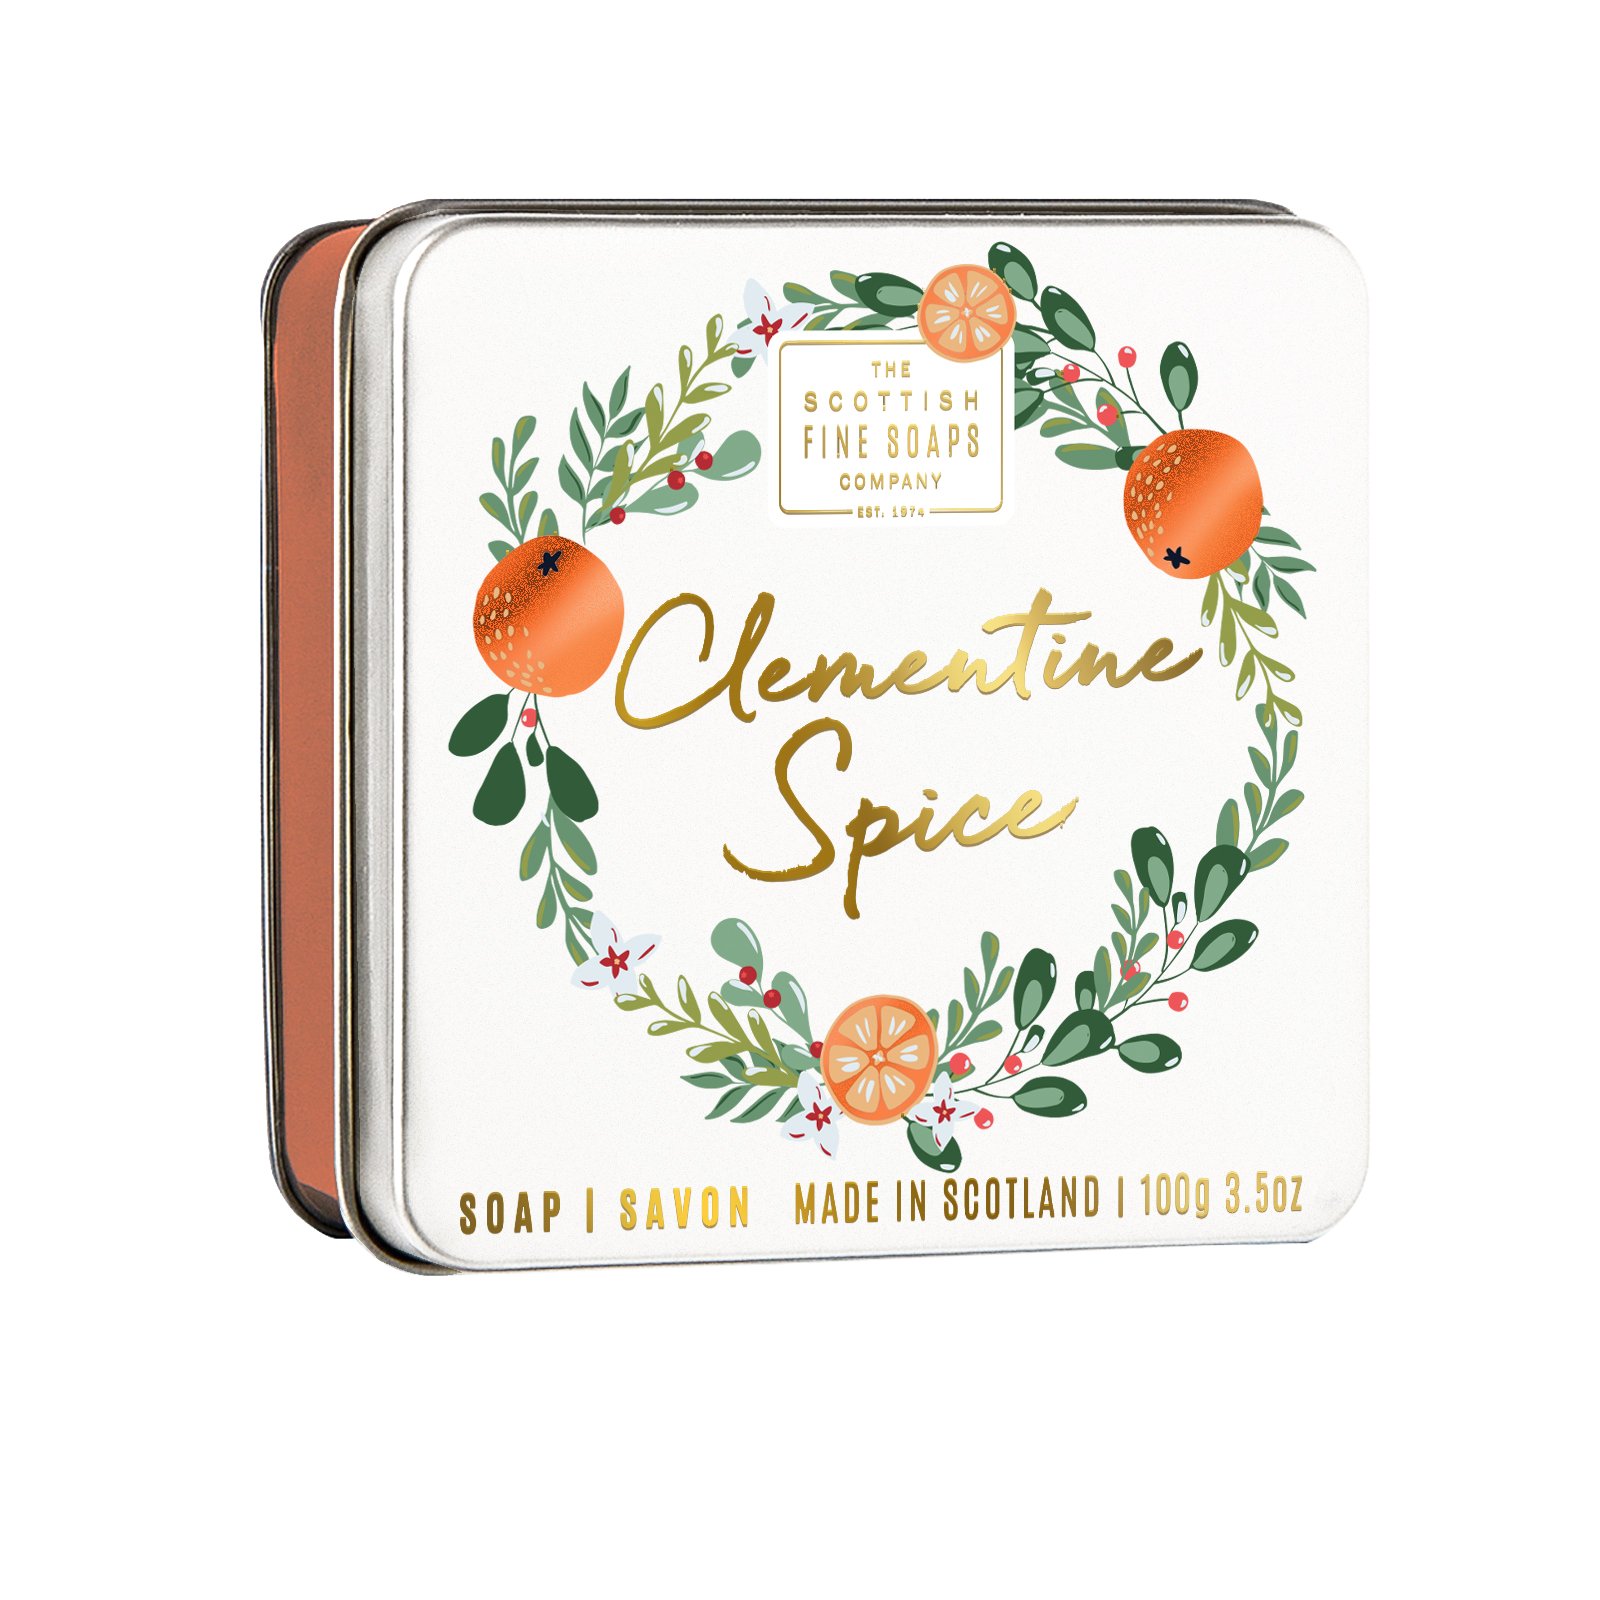 Sapun in cutie metalica - Clementine Spice, 100 g | The Scottish Fine Soaps